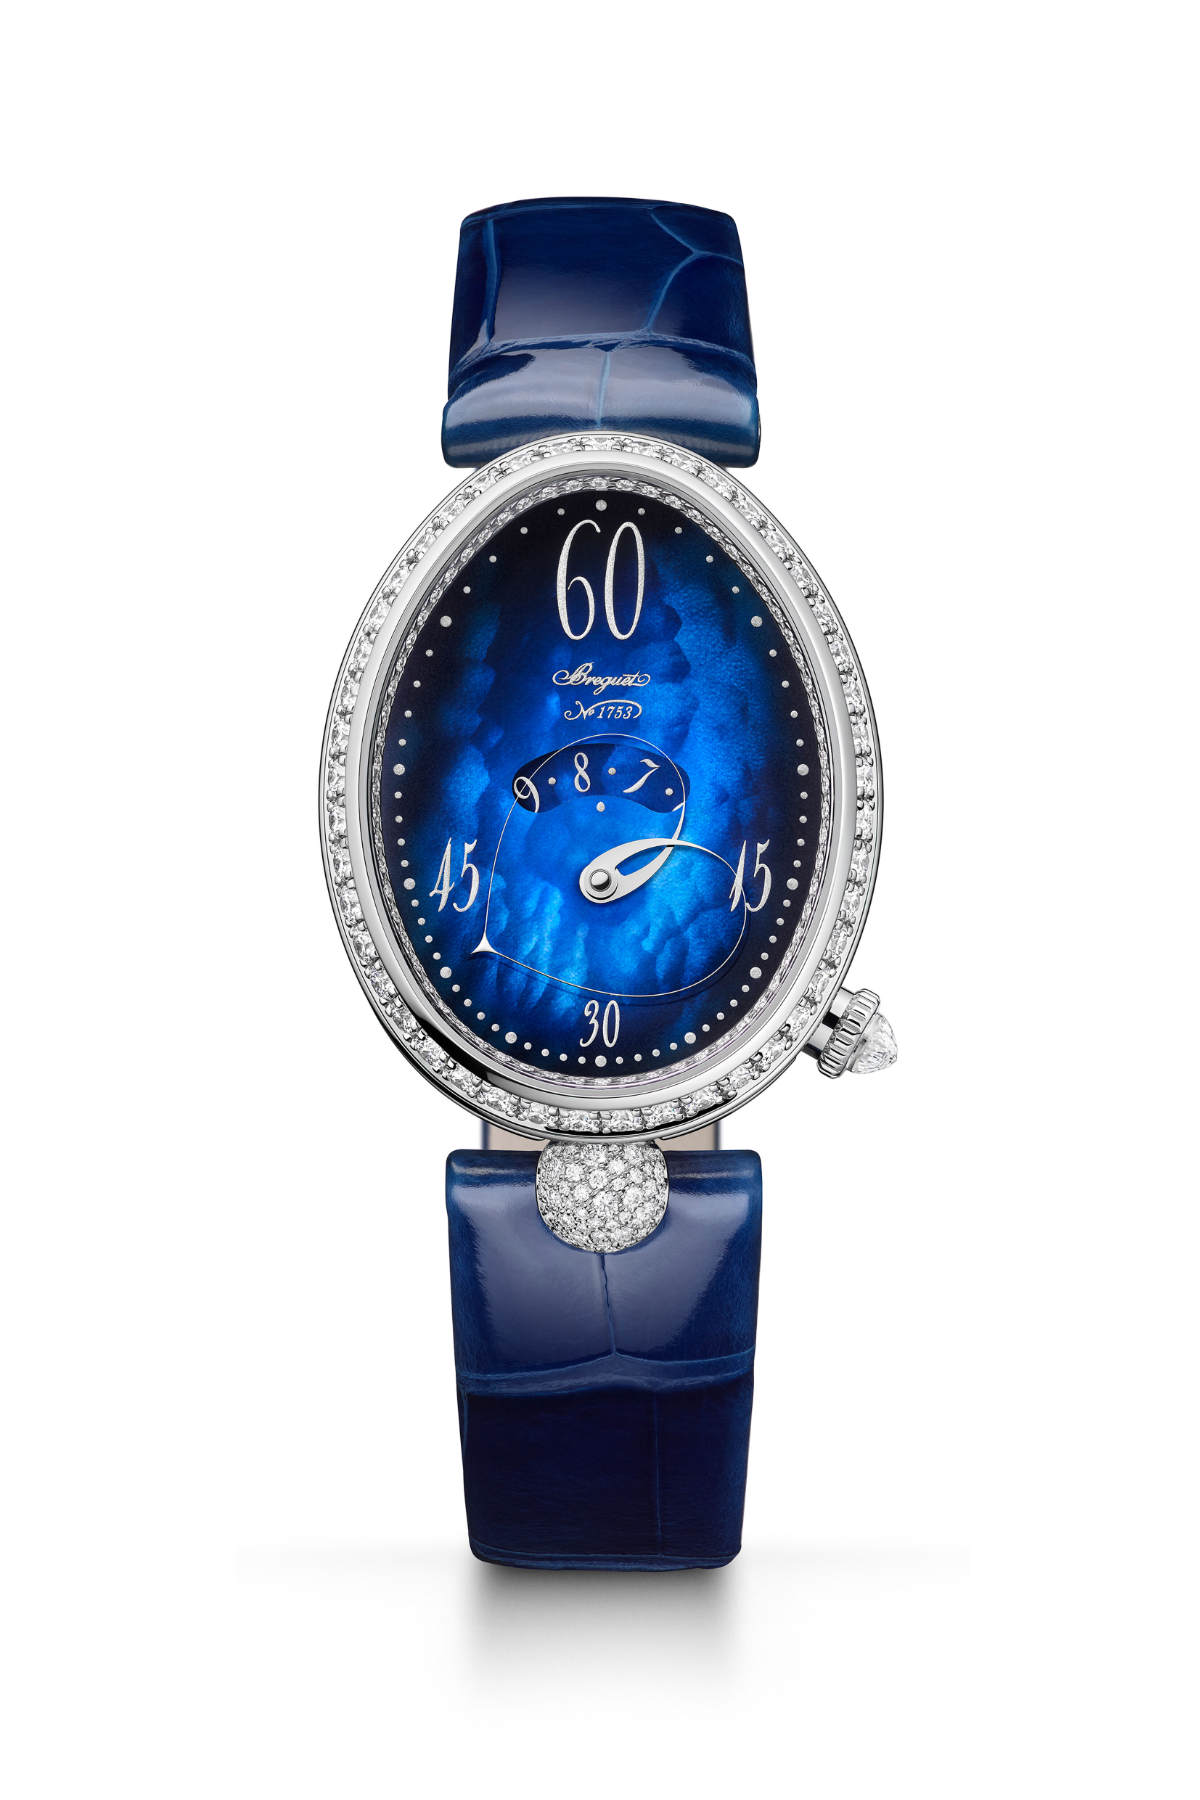 Breguet's Two New Timepieces: Reine De Naples 9835 And 9838